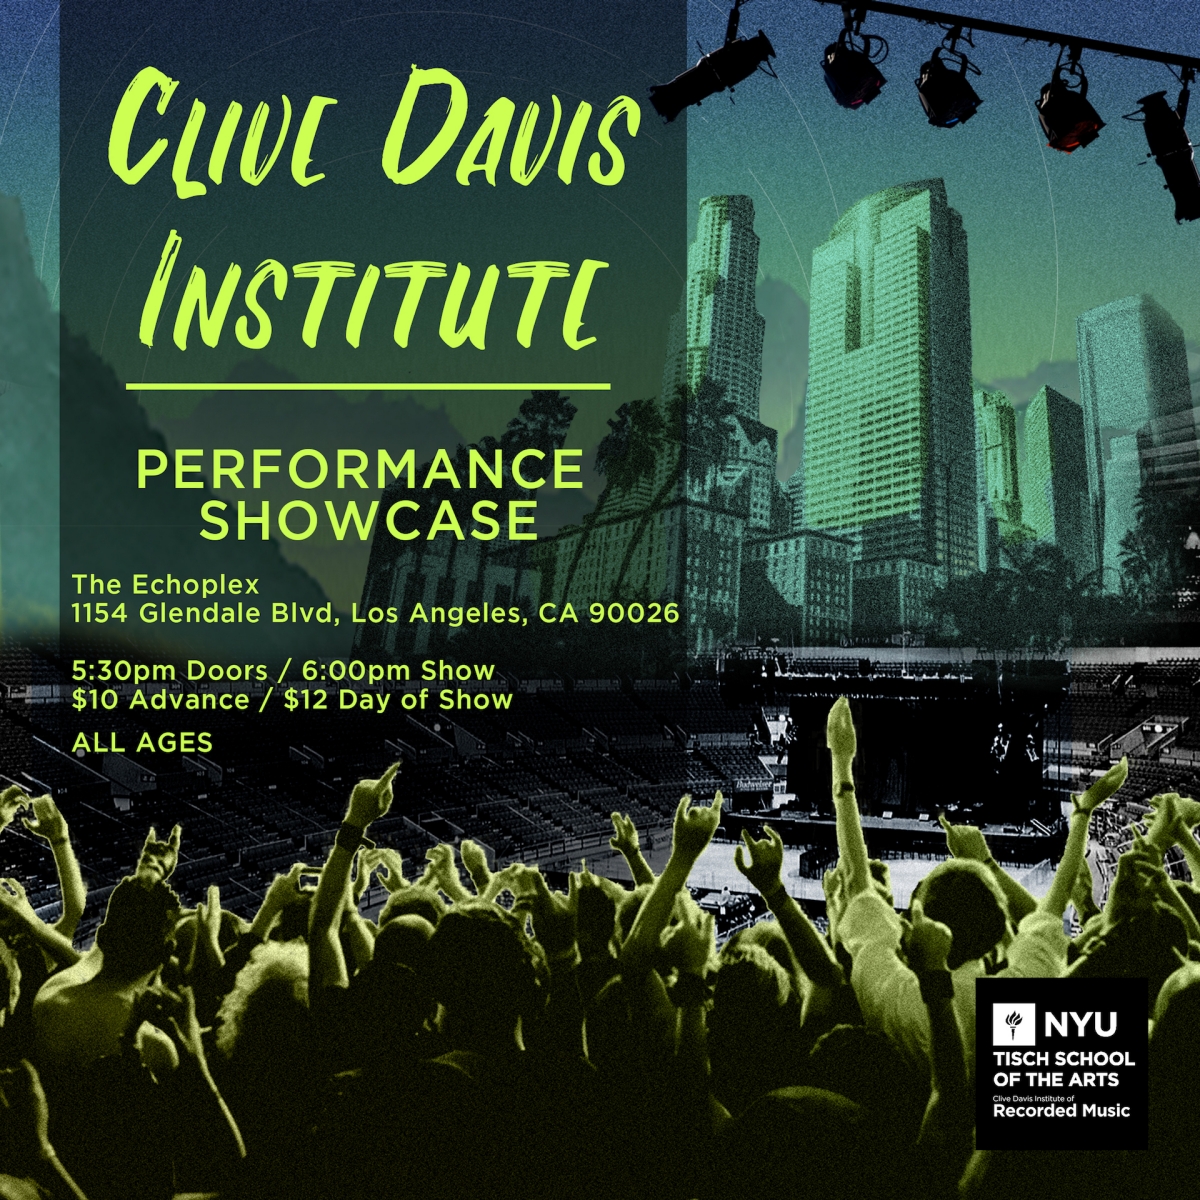 flyer for Clive Davis Institute Performance Showcase at Echoplex in LA